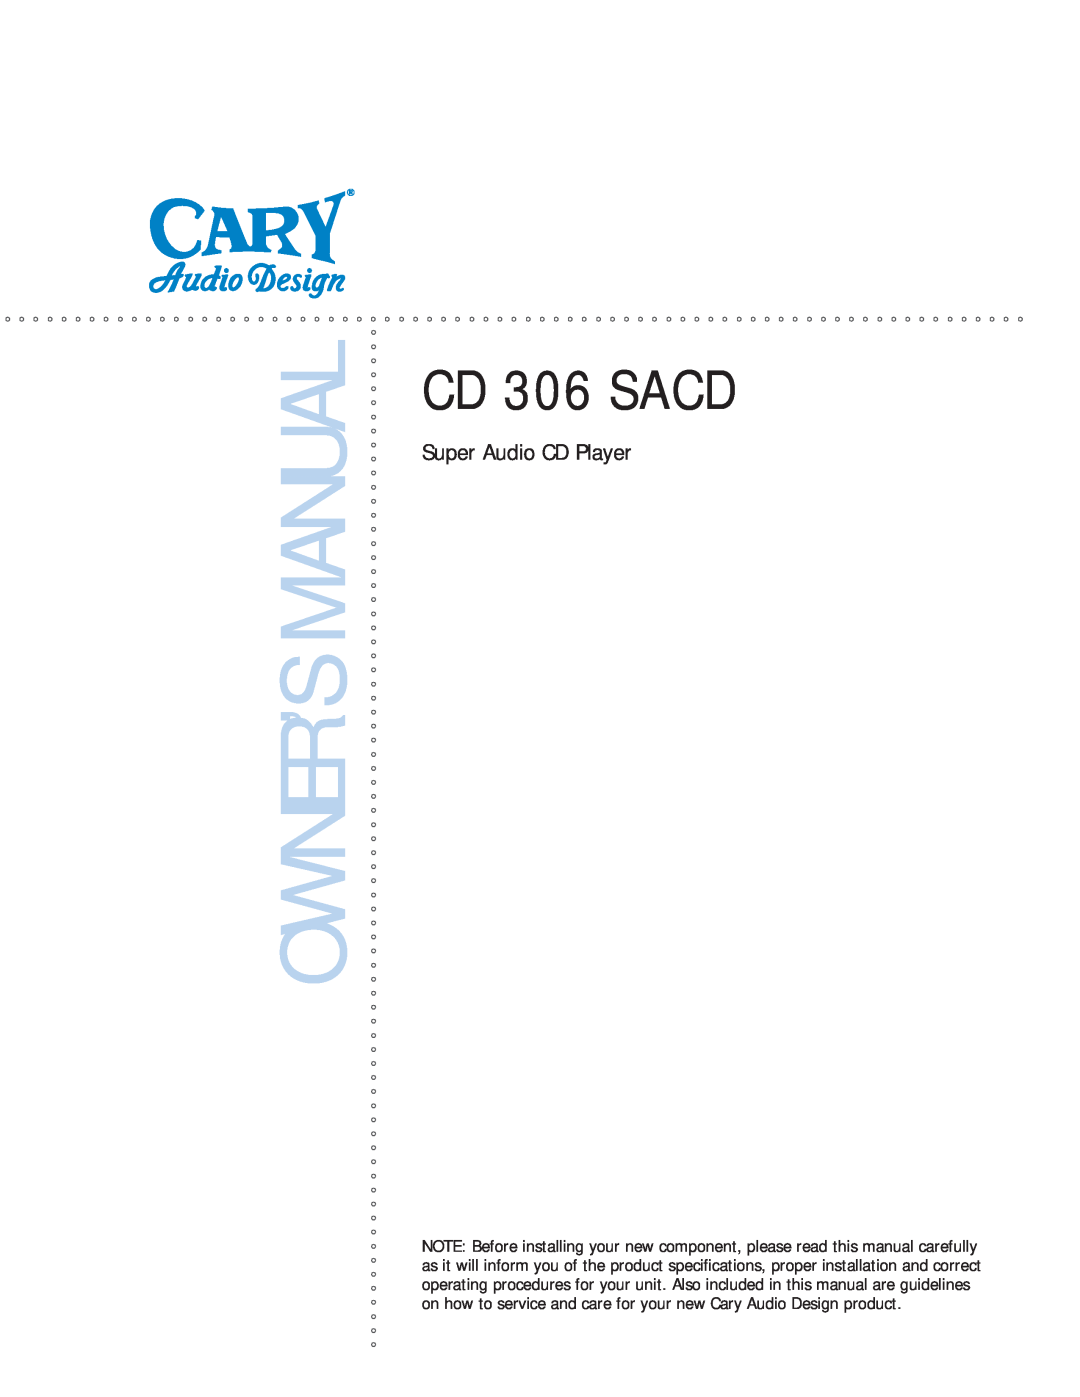 Cary Audio Design owner manual CD 306 SACD, Super Audio CD Player 